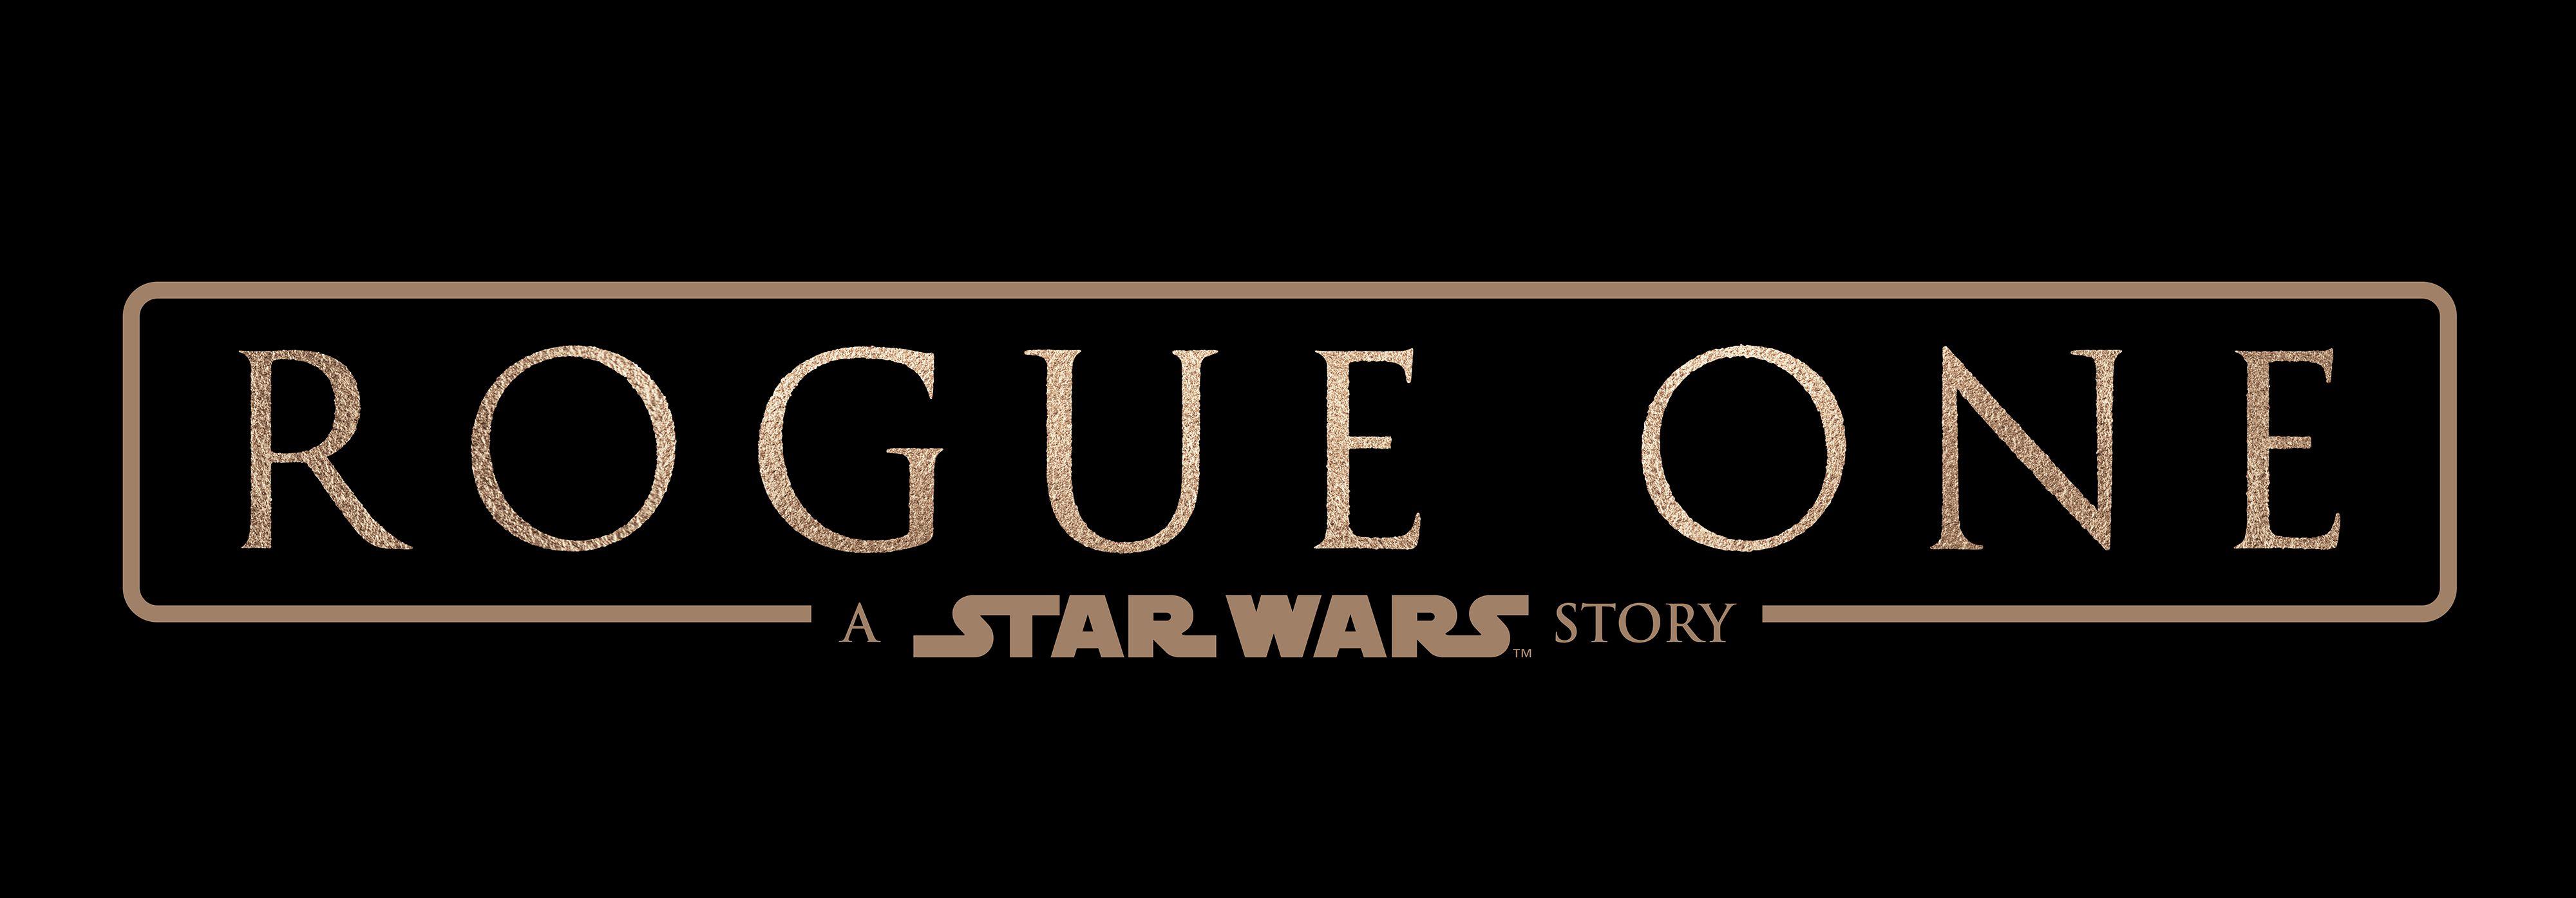 Movie Title Logo - Disney Reveals Movie Logos for Major Upcoming Releases